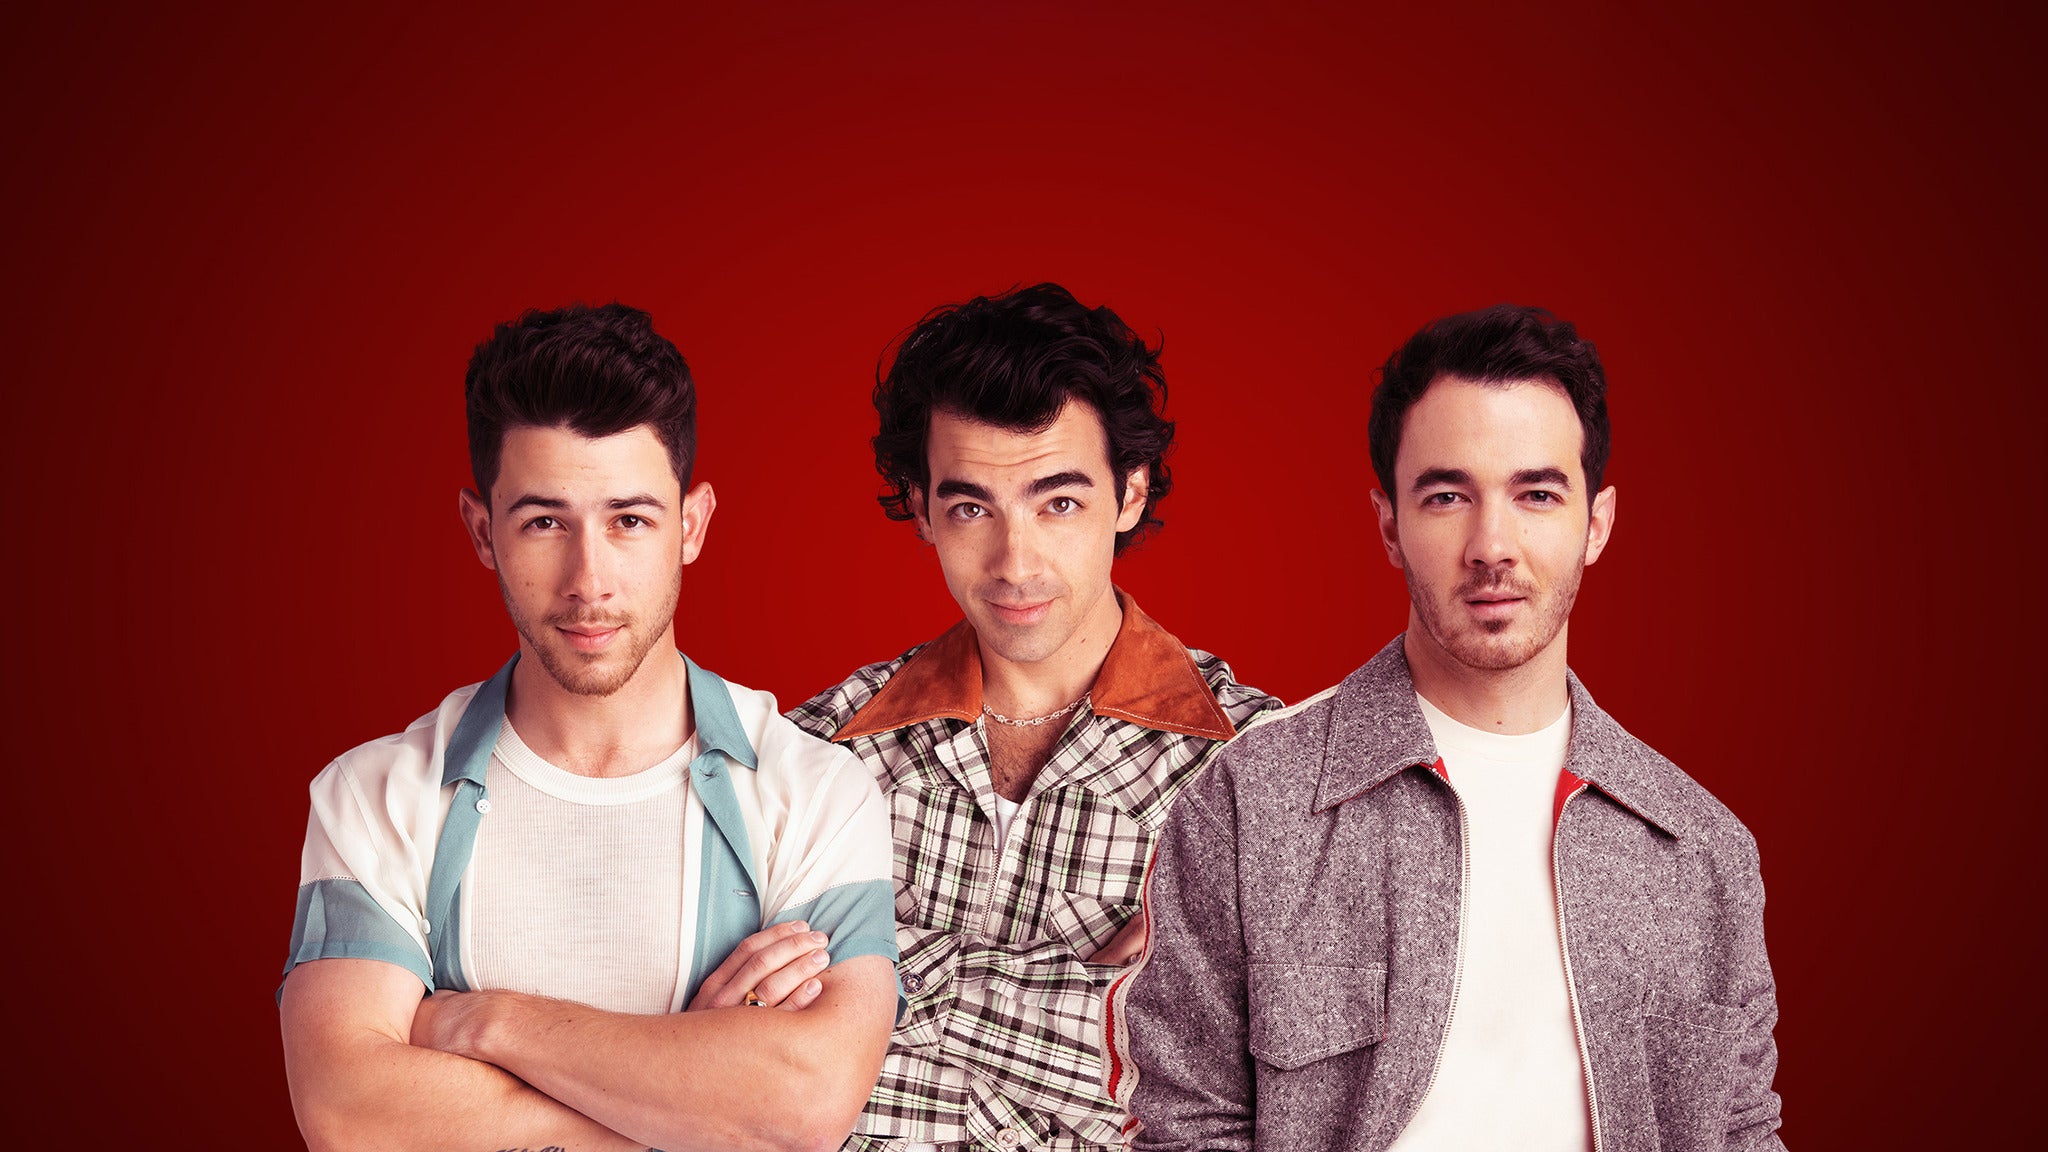 Jonas Brothers - Live in Vegas in Las Vegas promo photo for Fan presale offer code